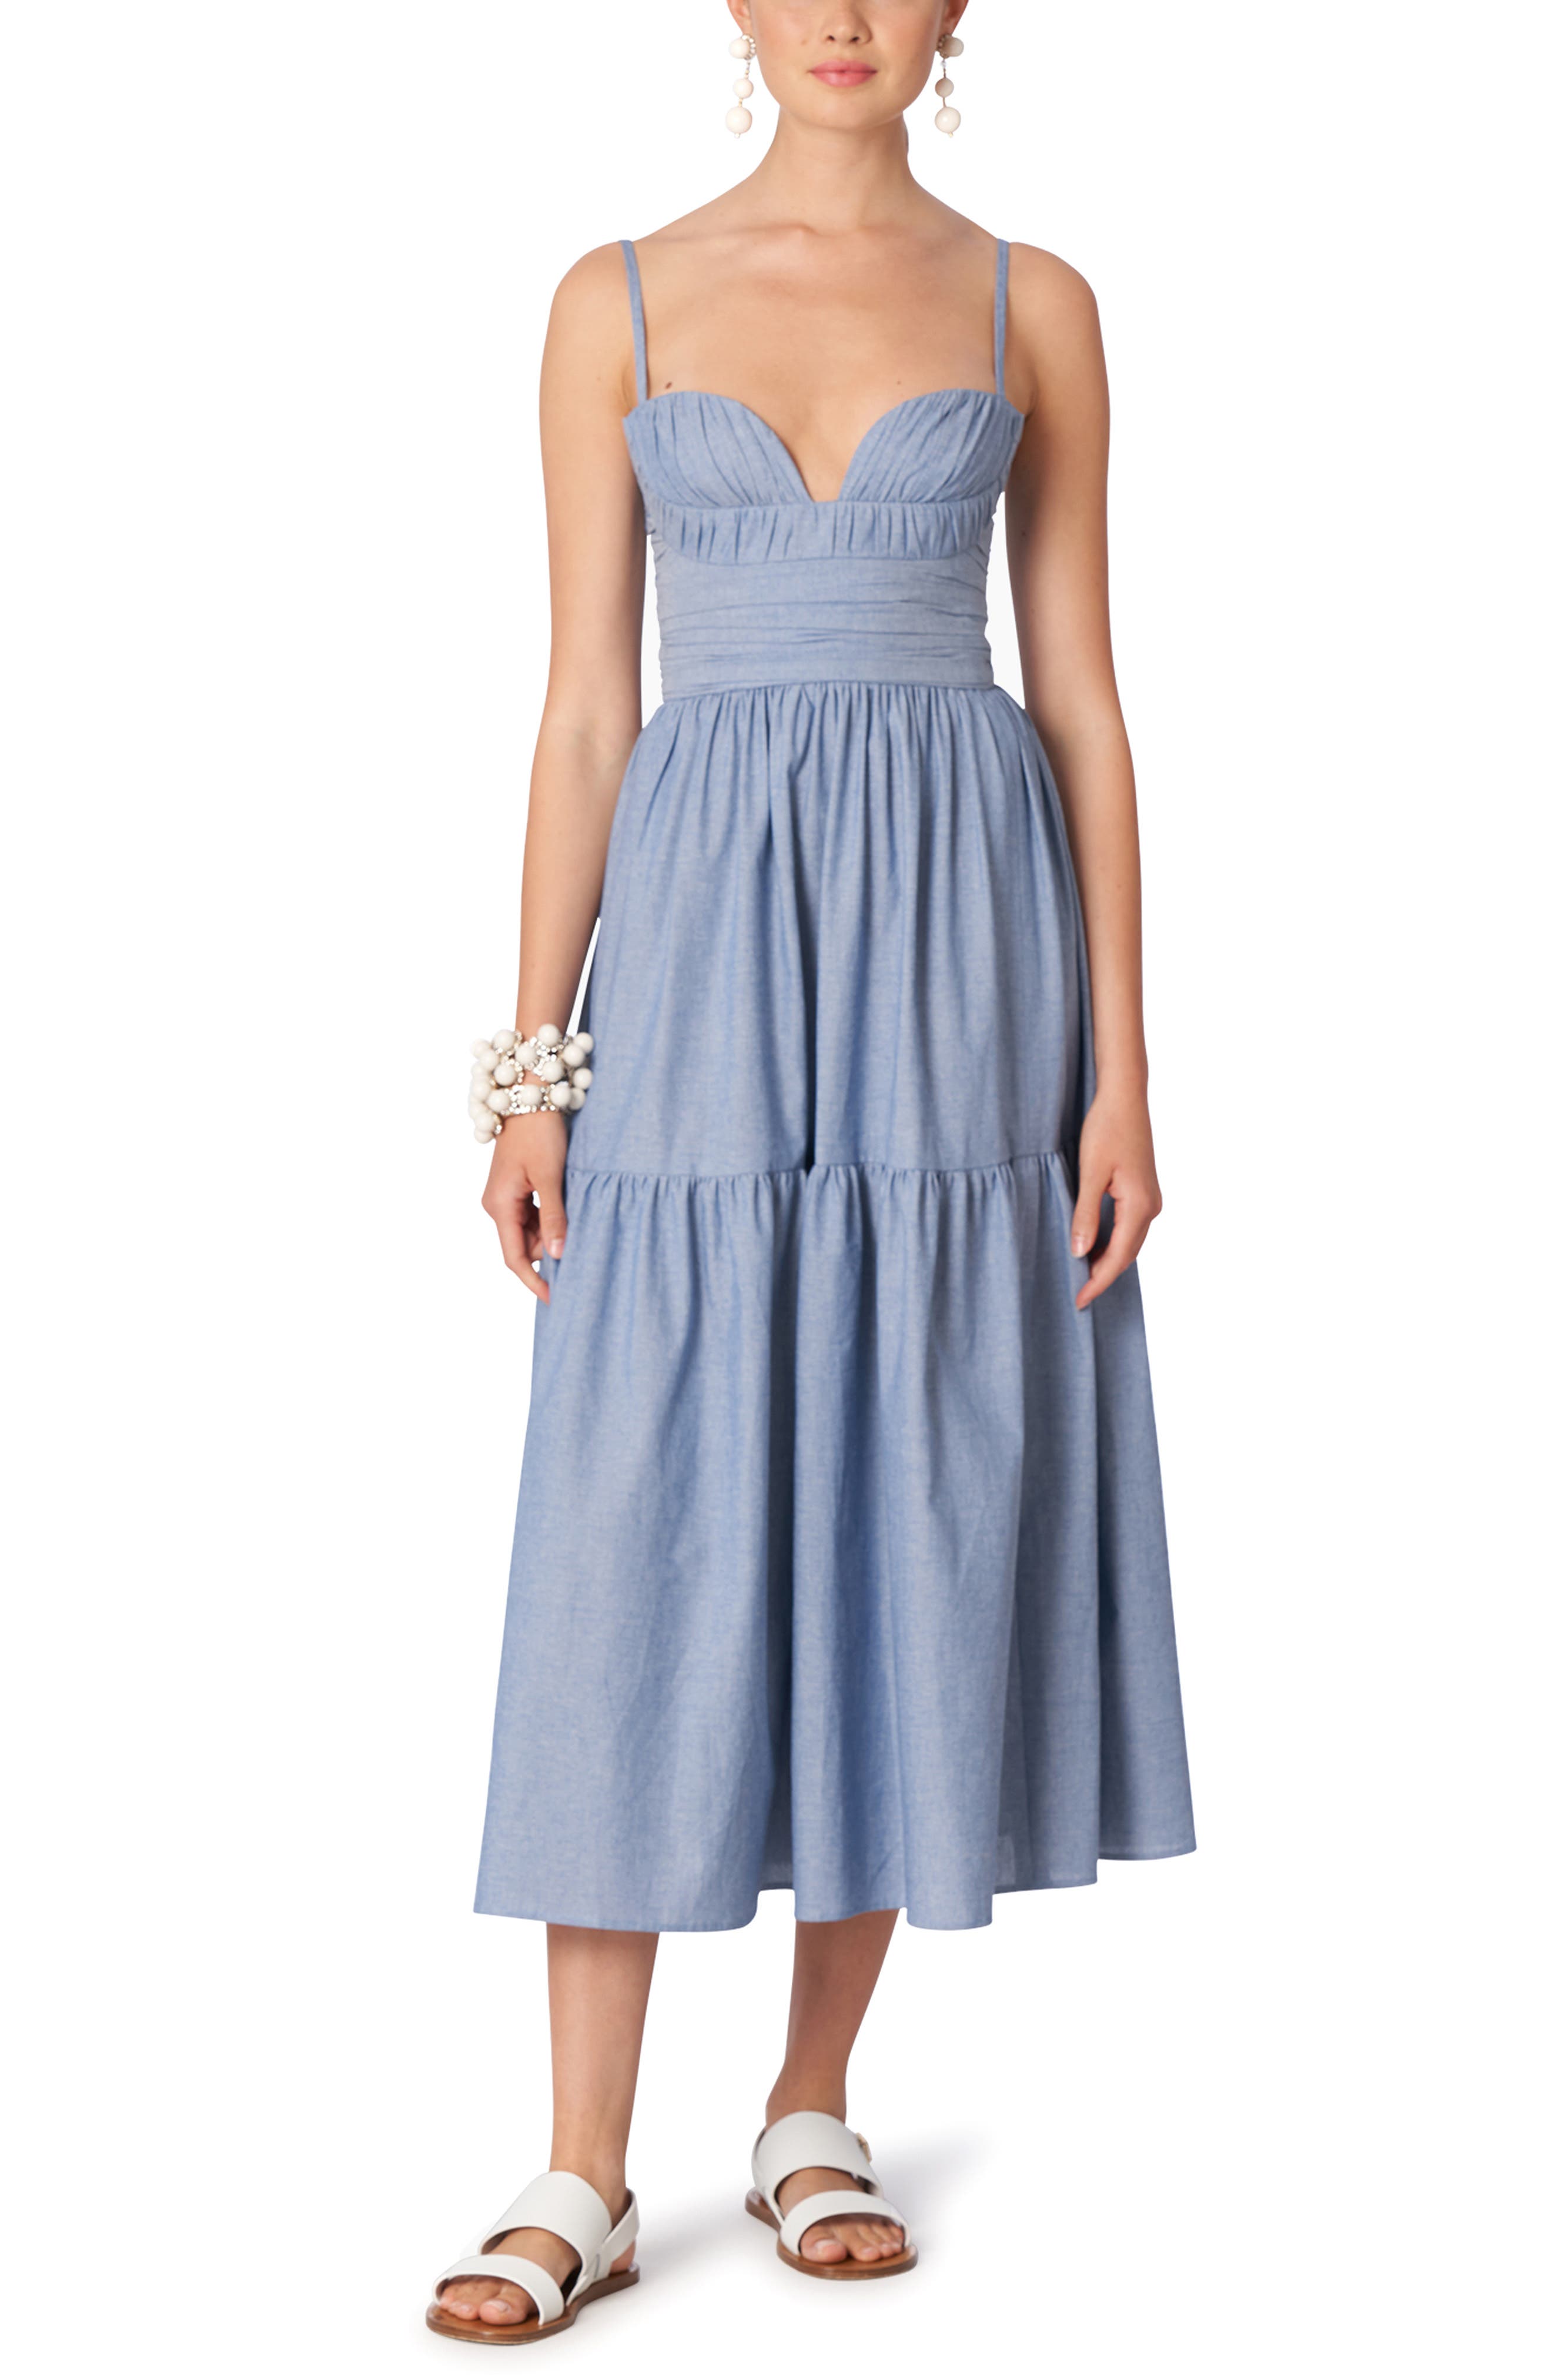 Carolina Herrera Tiered Cotton Midi Dress in Blue at Nordstrom, Size 8